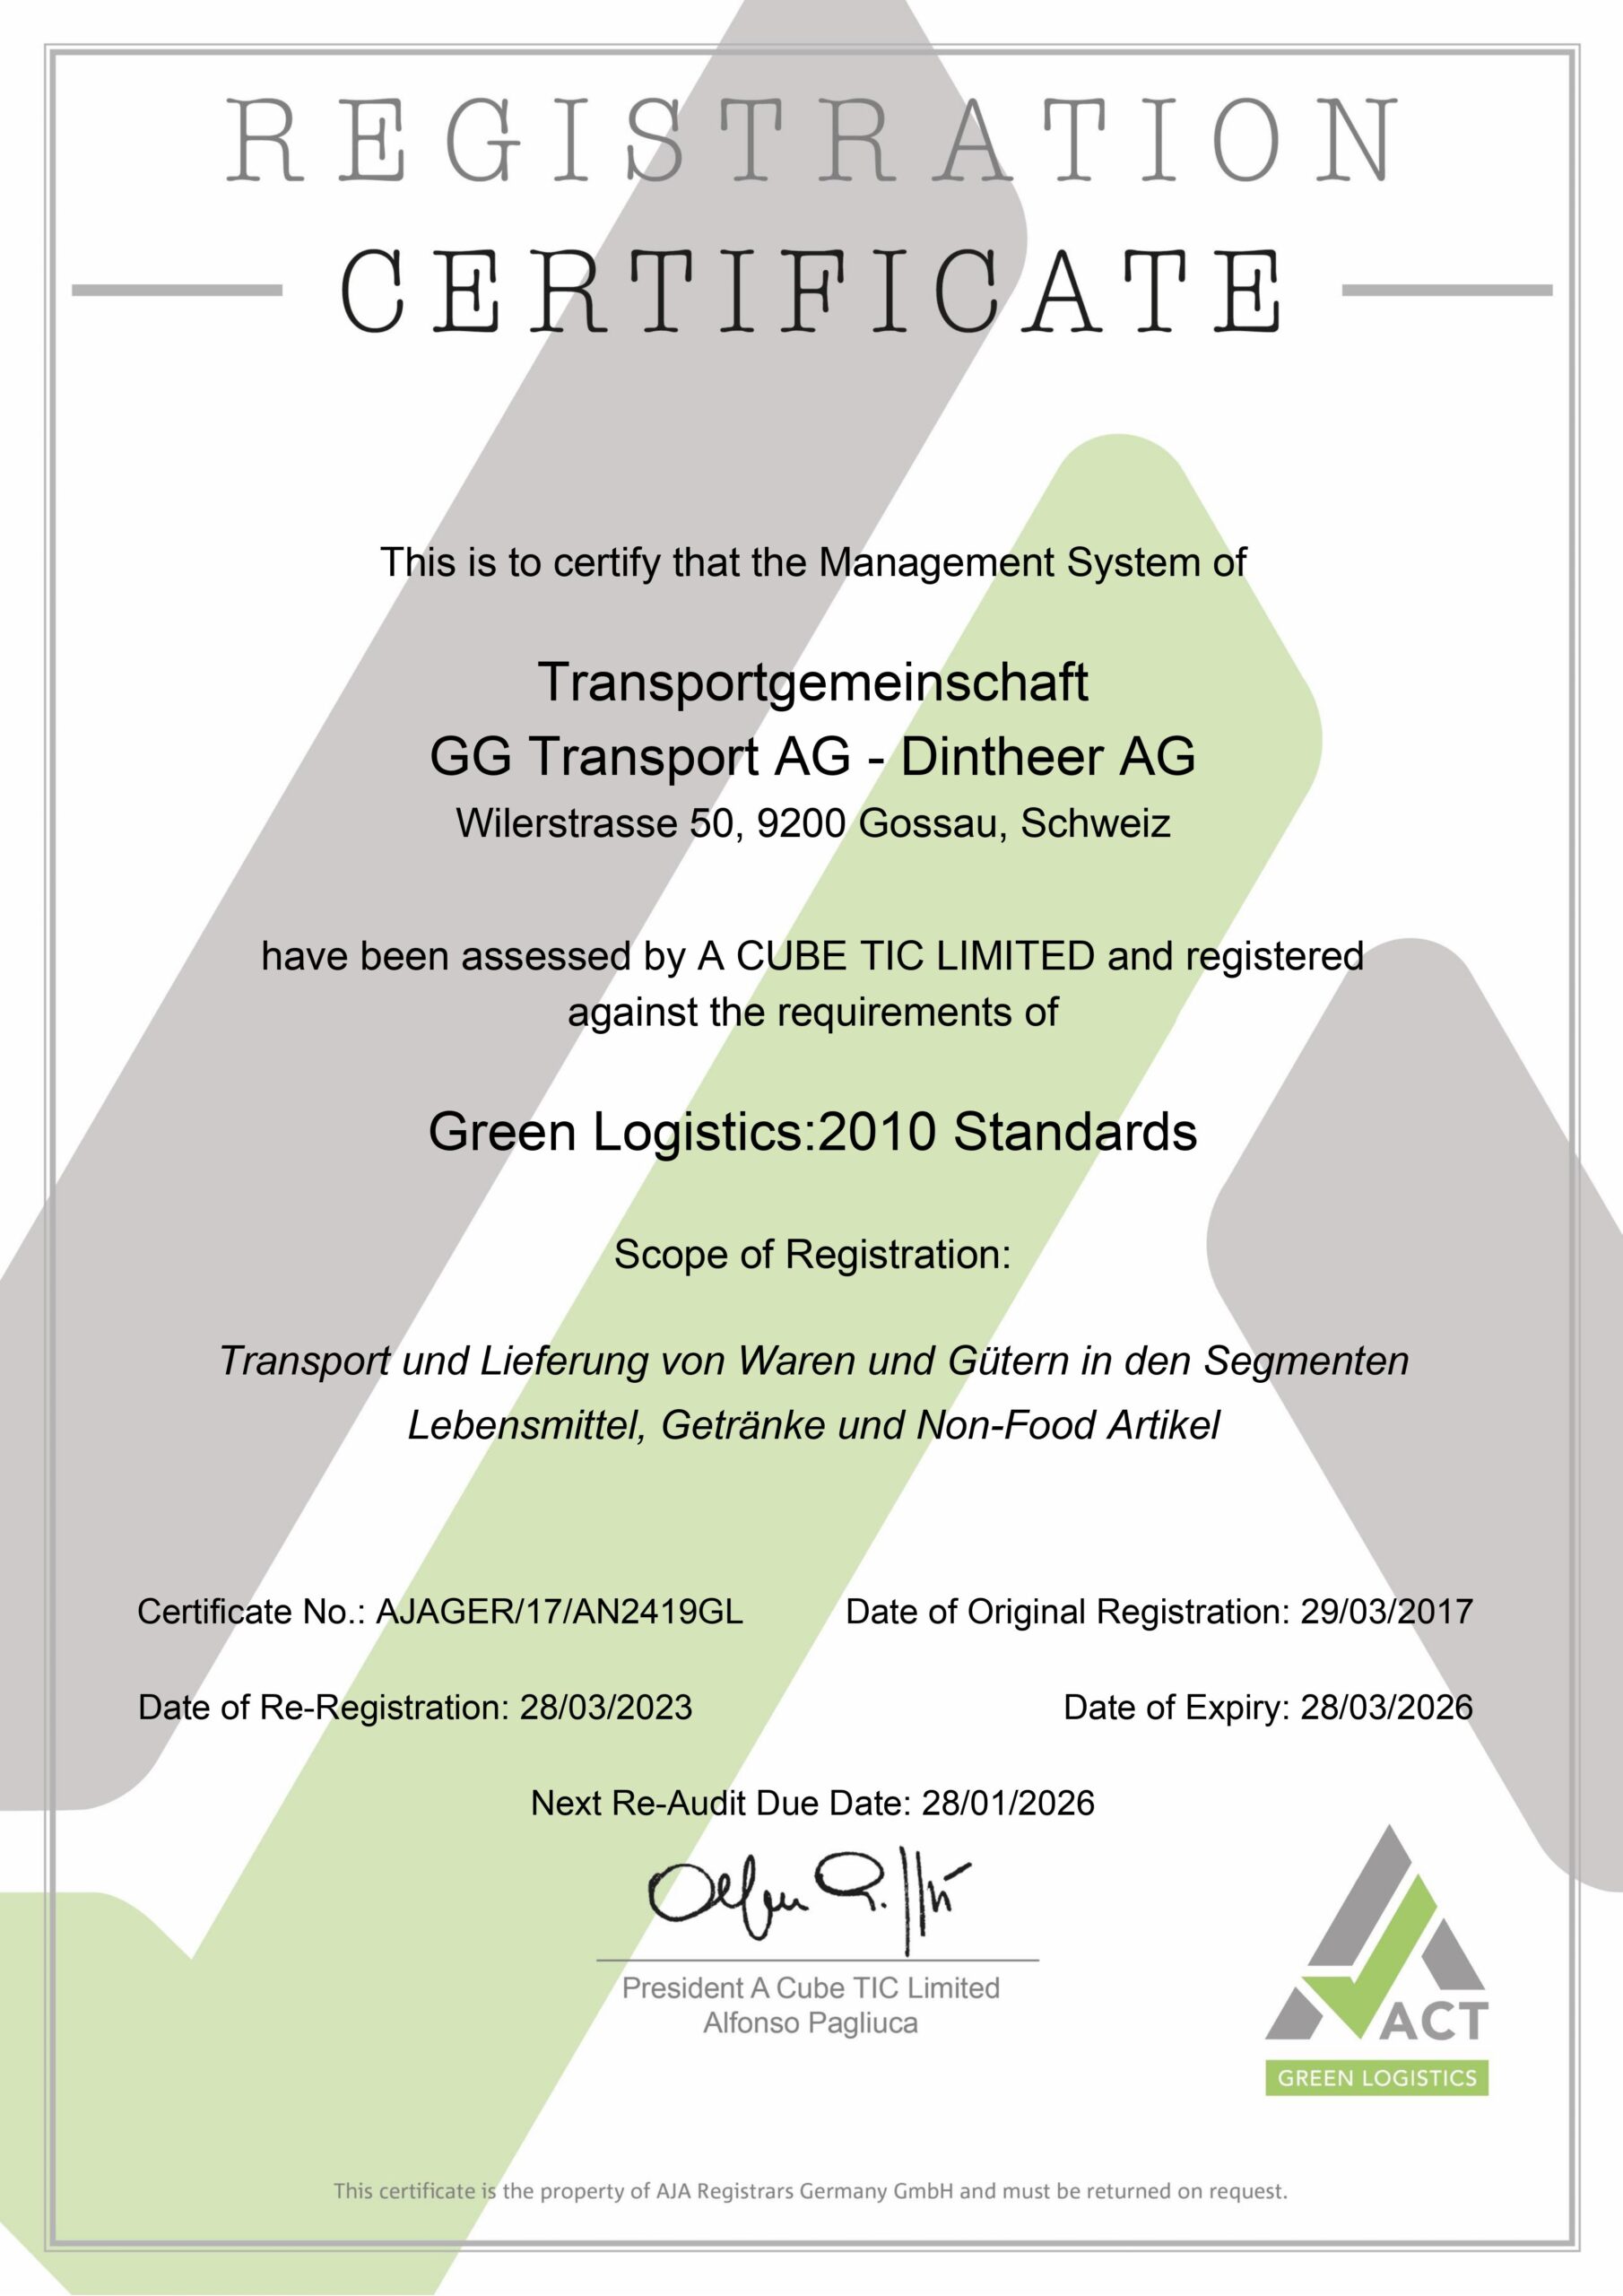 Green Logistics: 2010 Standards